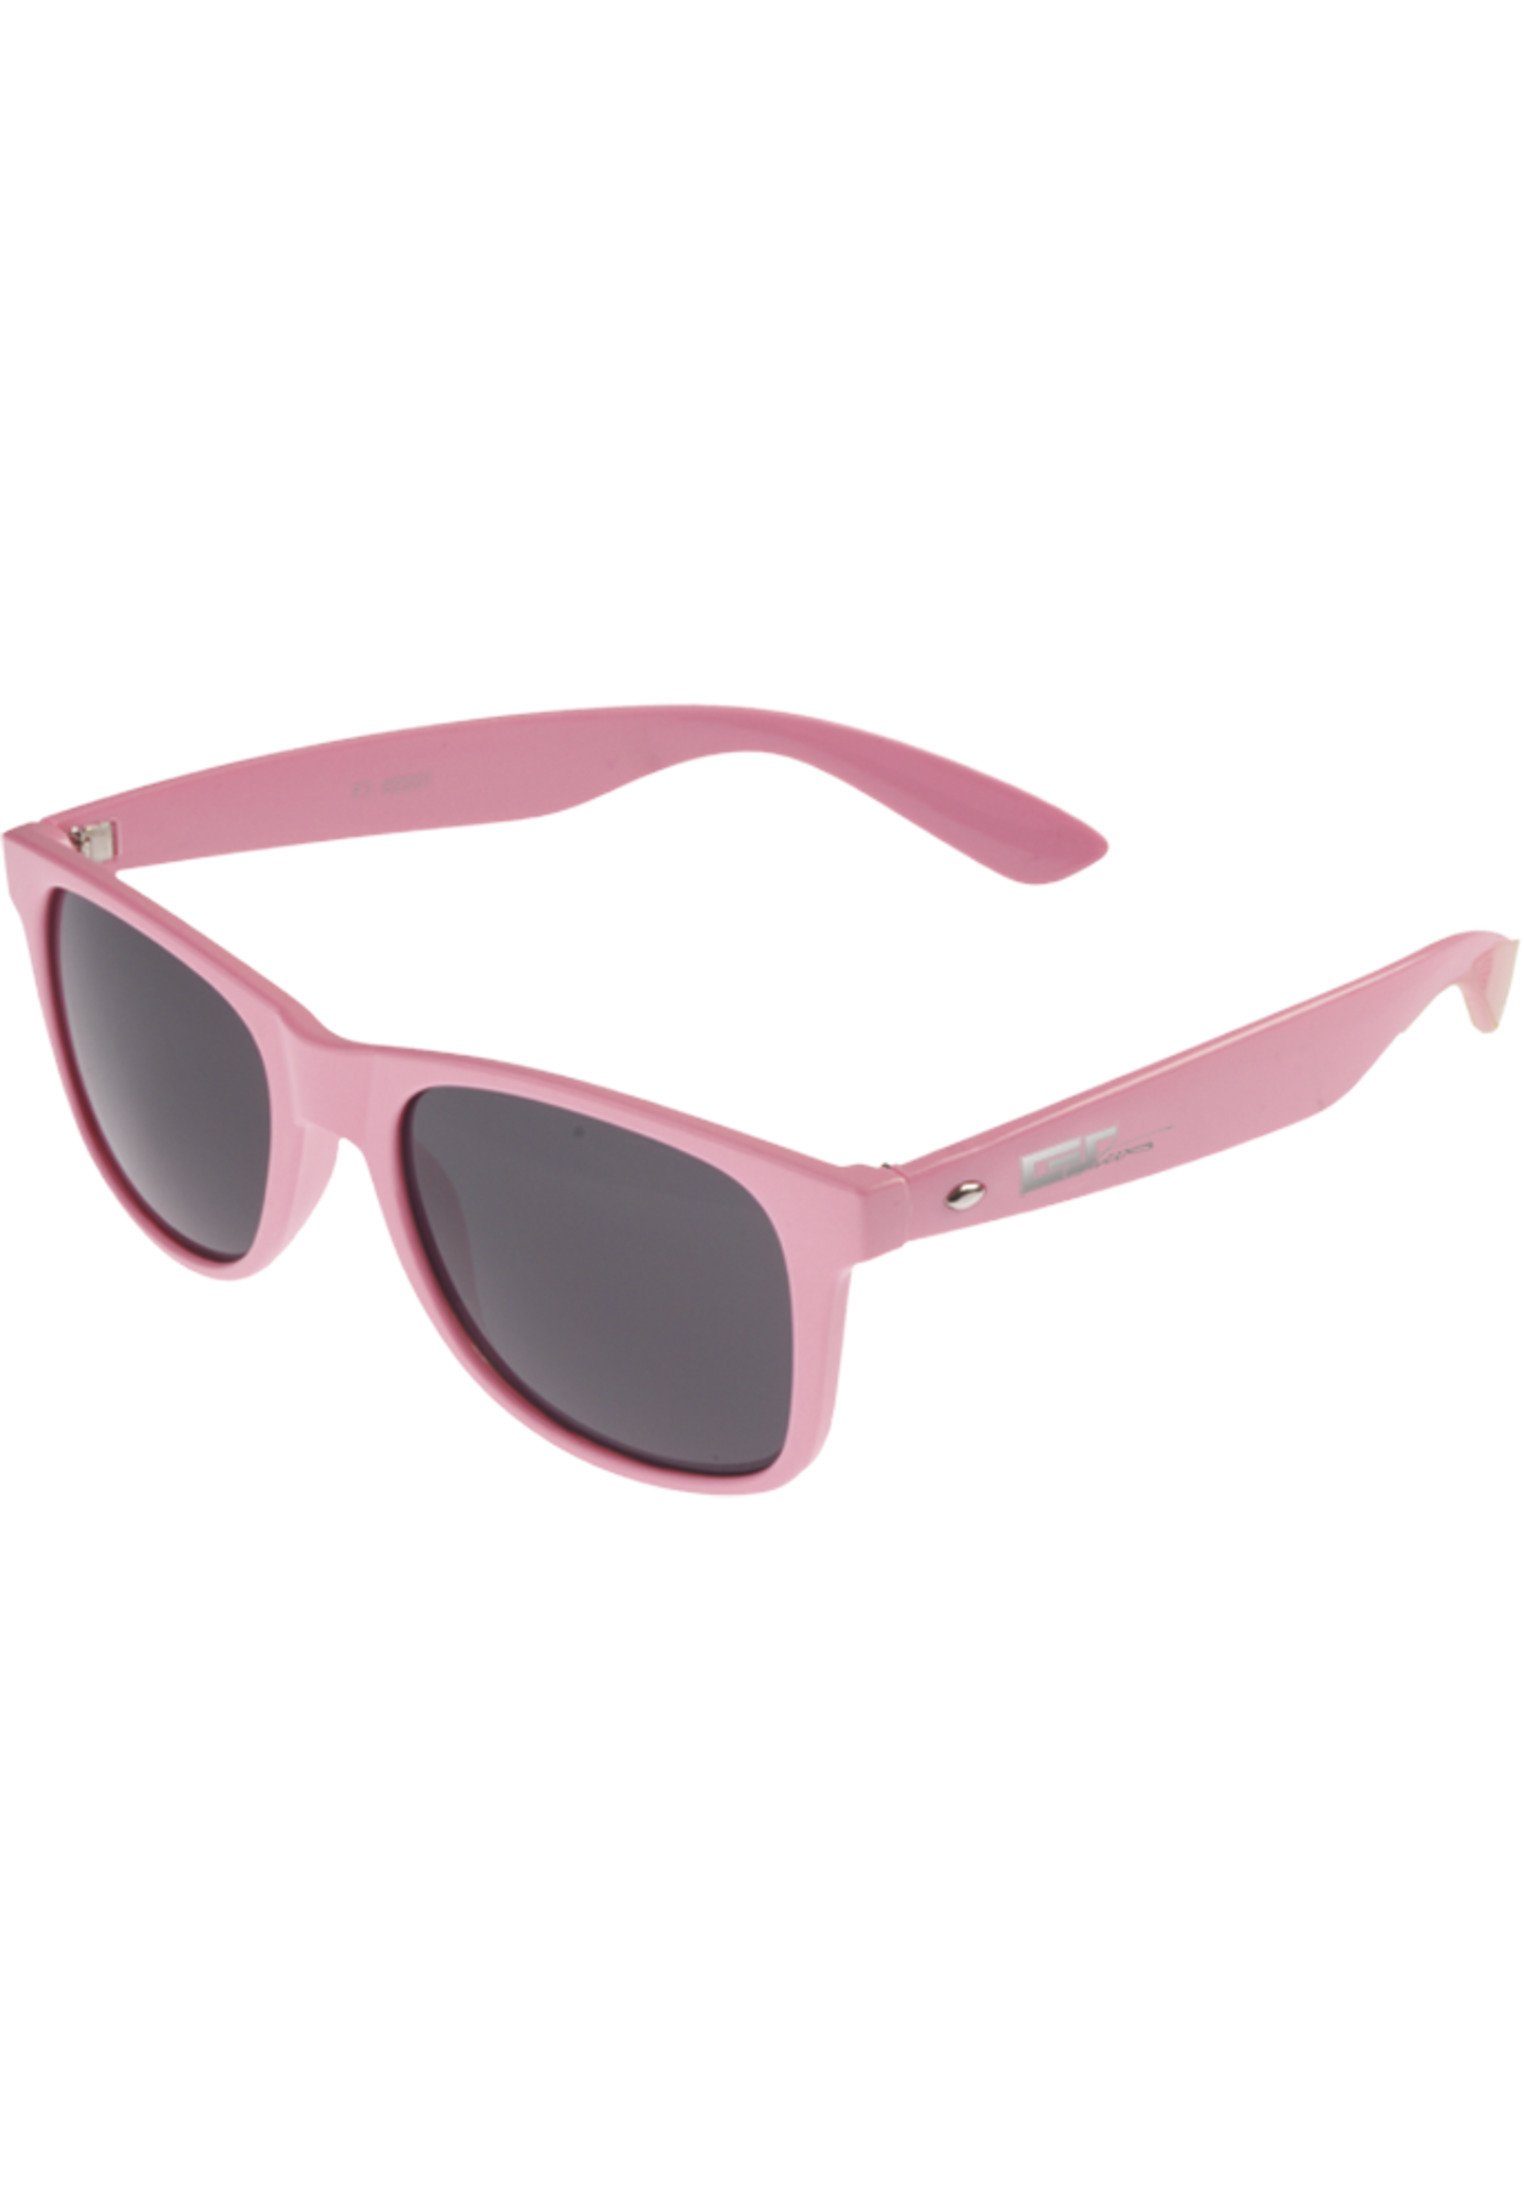 MSTRDS Sonnenbrille Accessoires Groove Shades GStwo neonpink | Sonnenbrillen